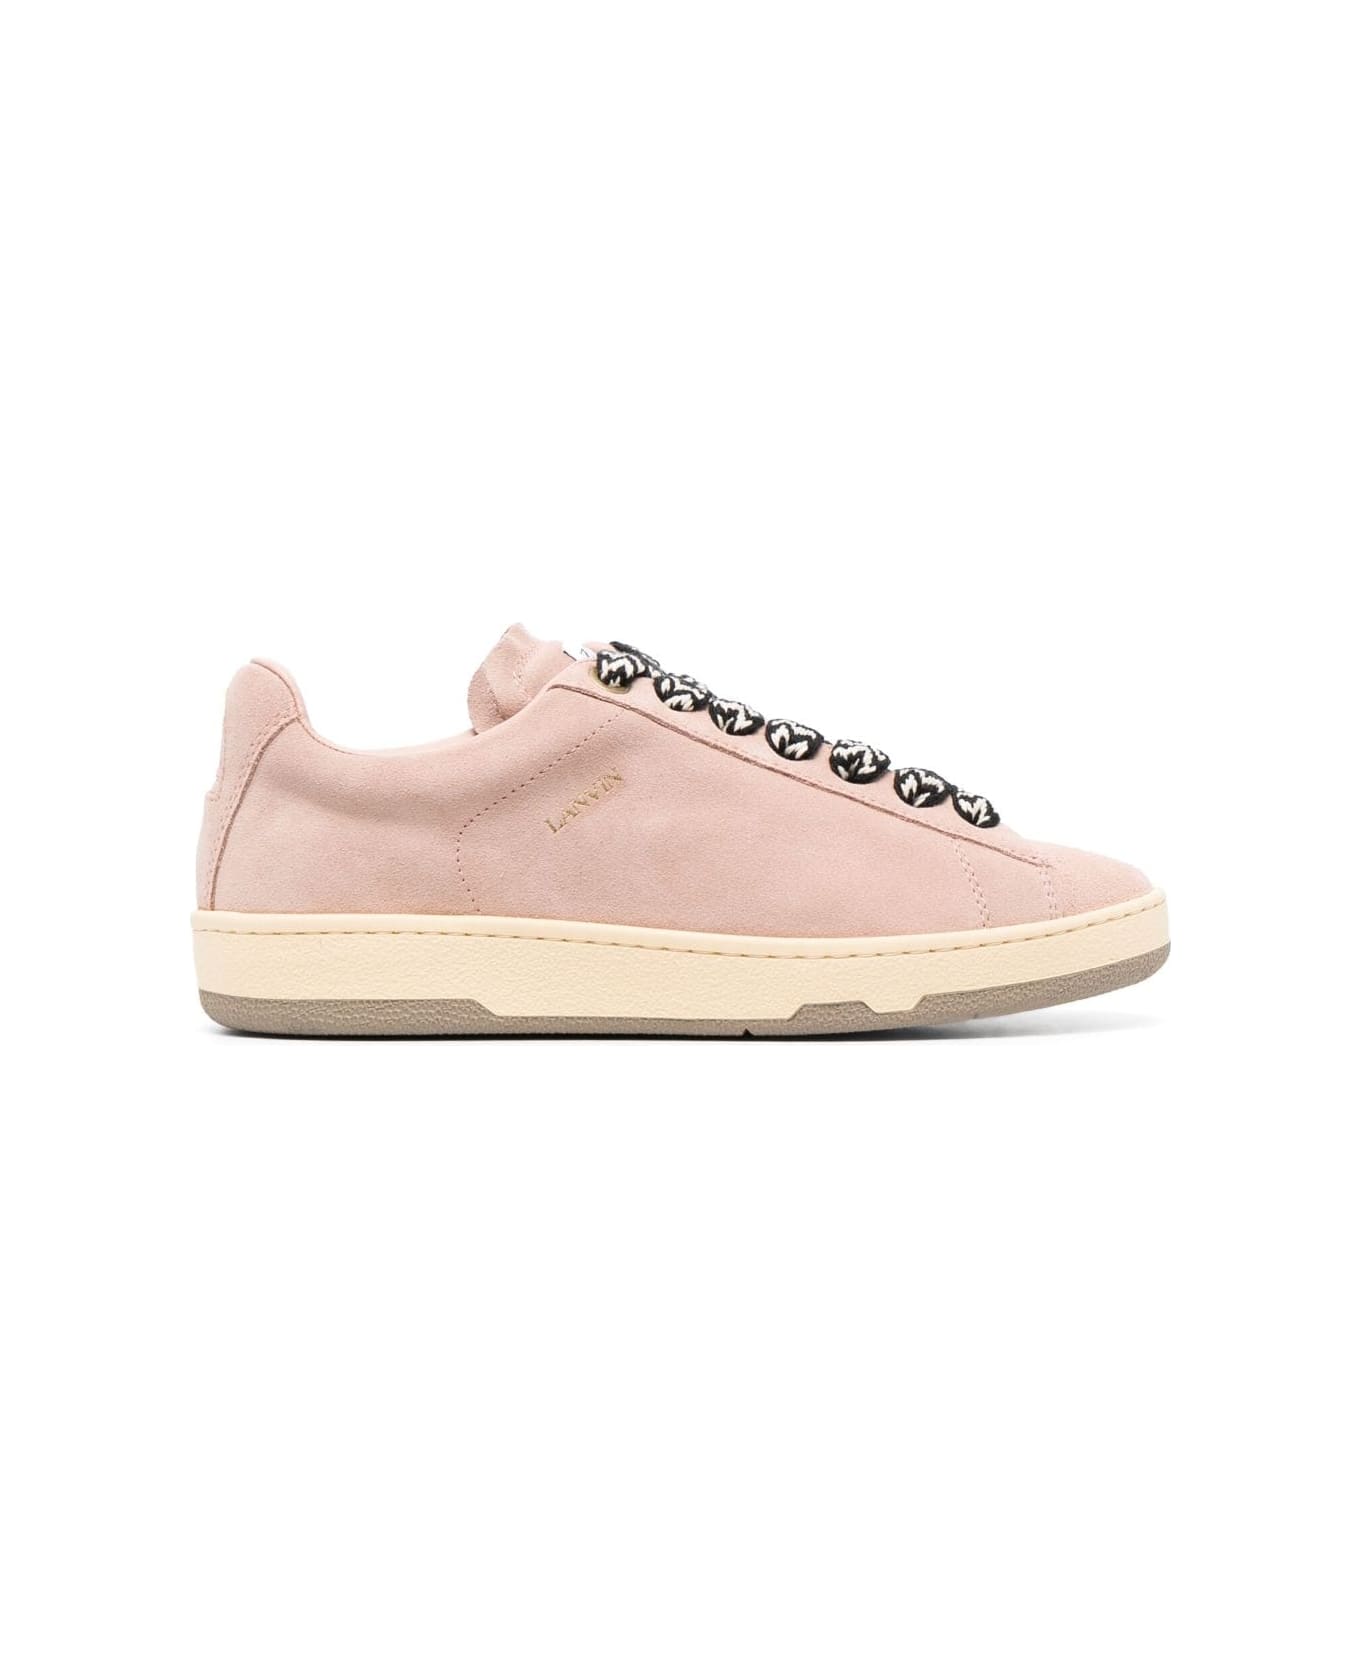 Lanvin Lite Curb Low Top Sneakers - Pale Pink スニーカー